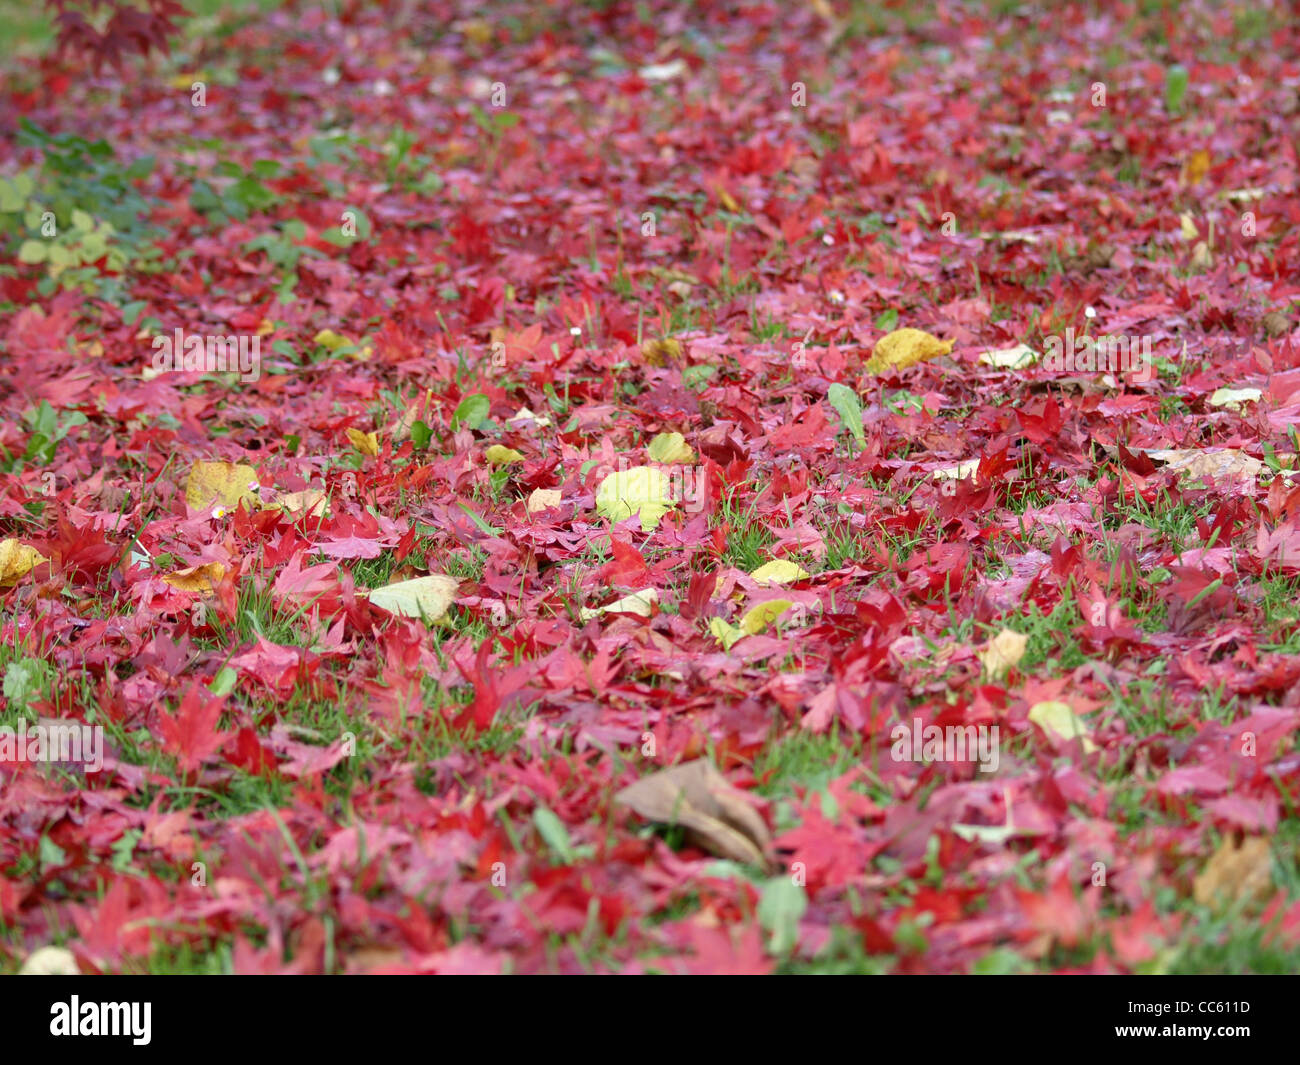 Caído hojas de arce en otoño / abgefallene Ahornblätter im Herbst Foto de stock